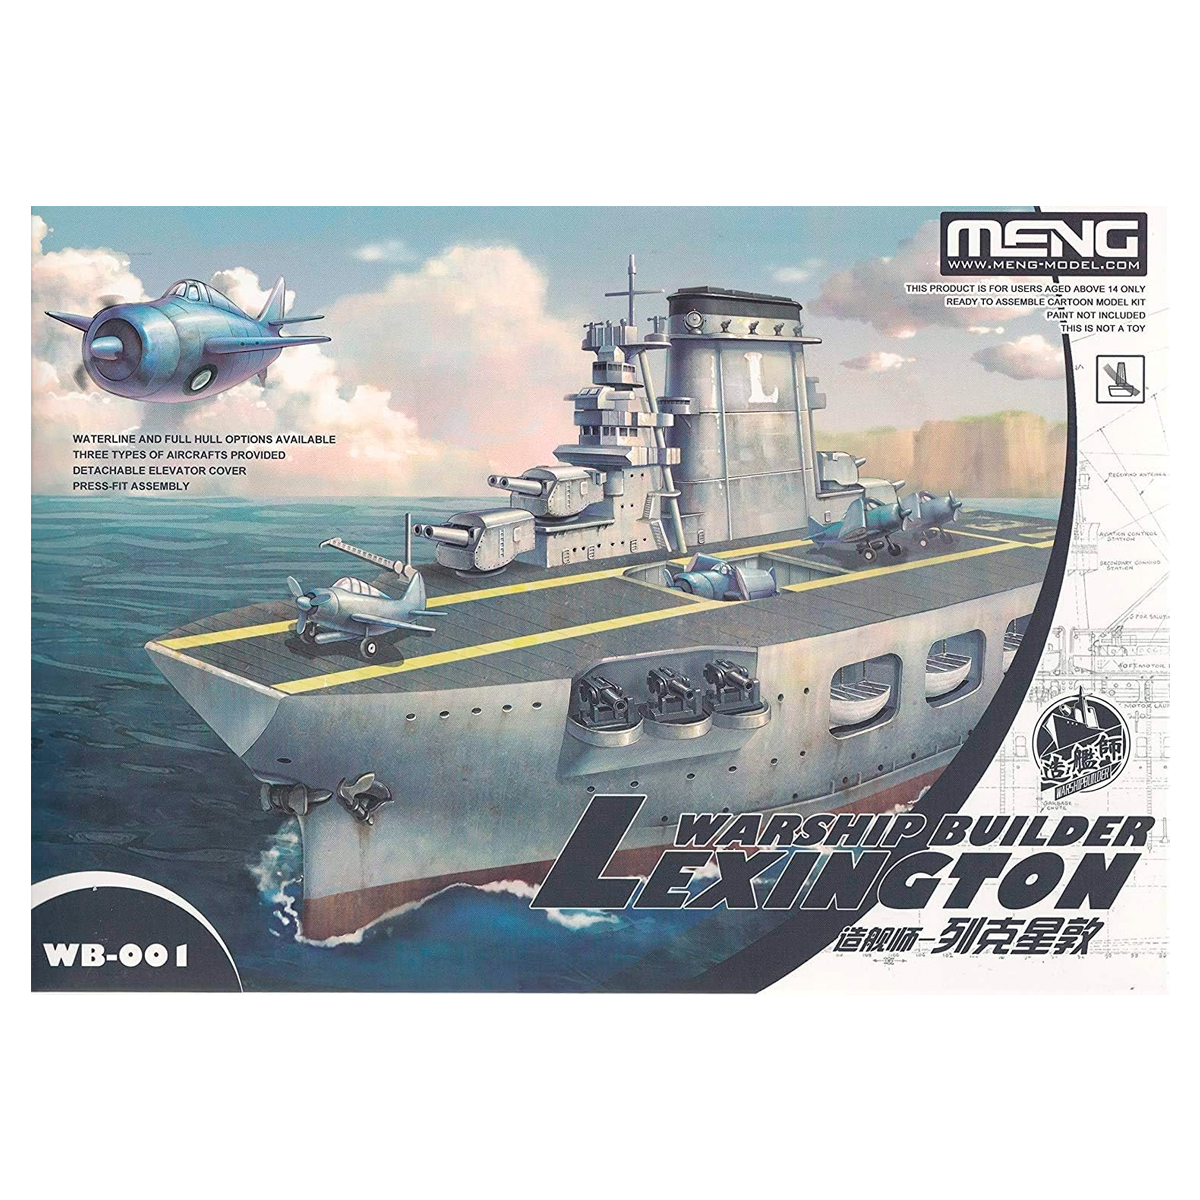 Warship builder Lexington (Cartoon Model)